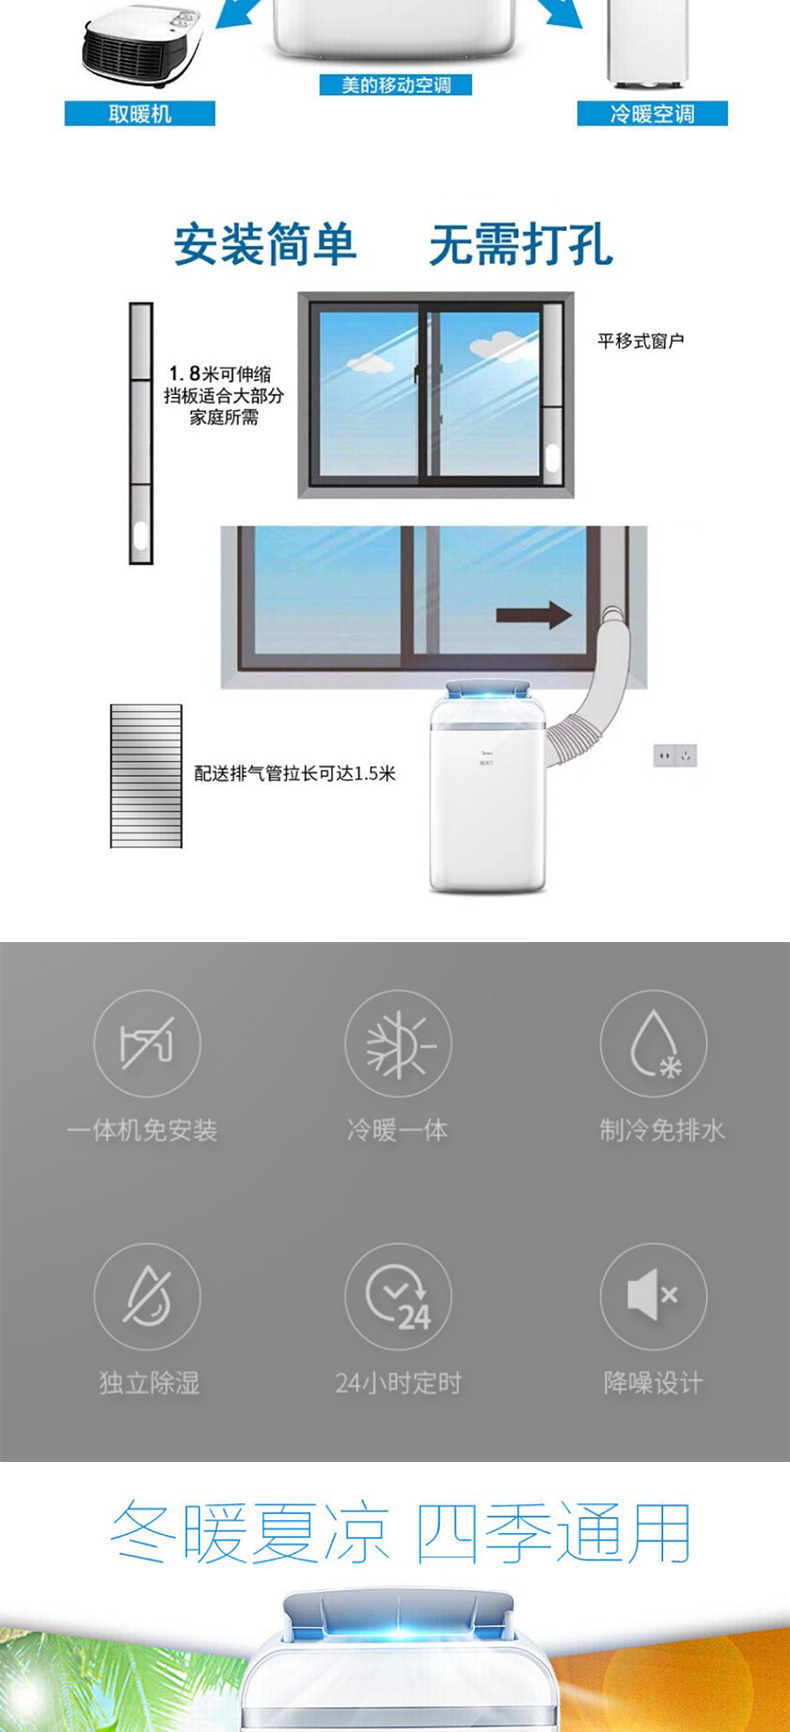 美的 Midea 移动空调冷暖一体机家用免安装厨房1.5匹 KYR-35/N1Y-PD2 